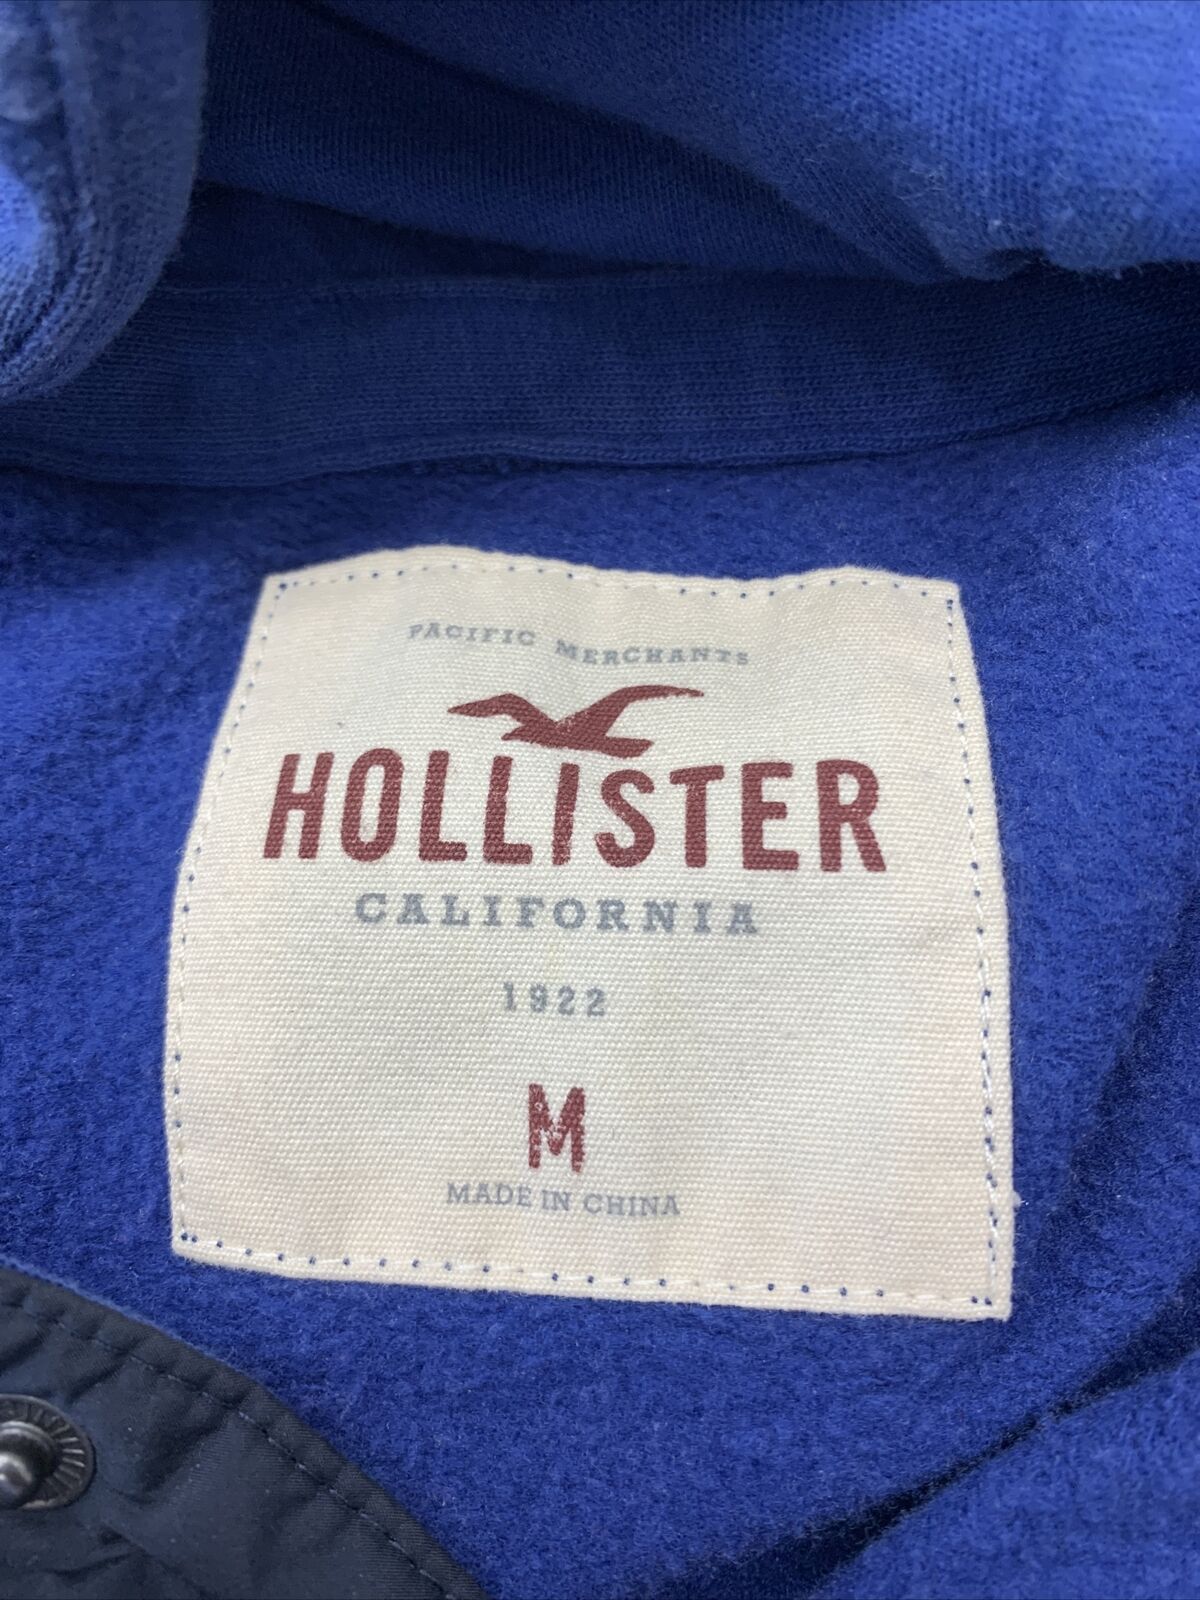 Hollister California 1922.